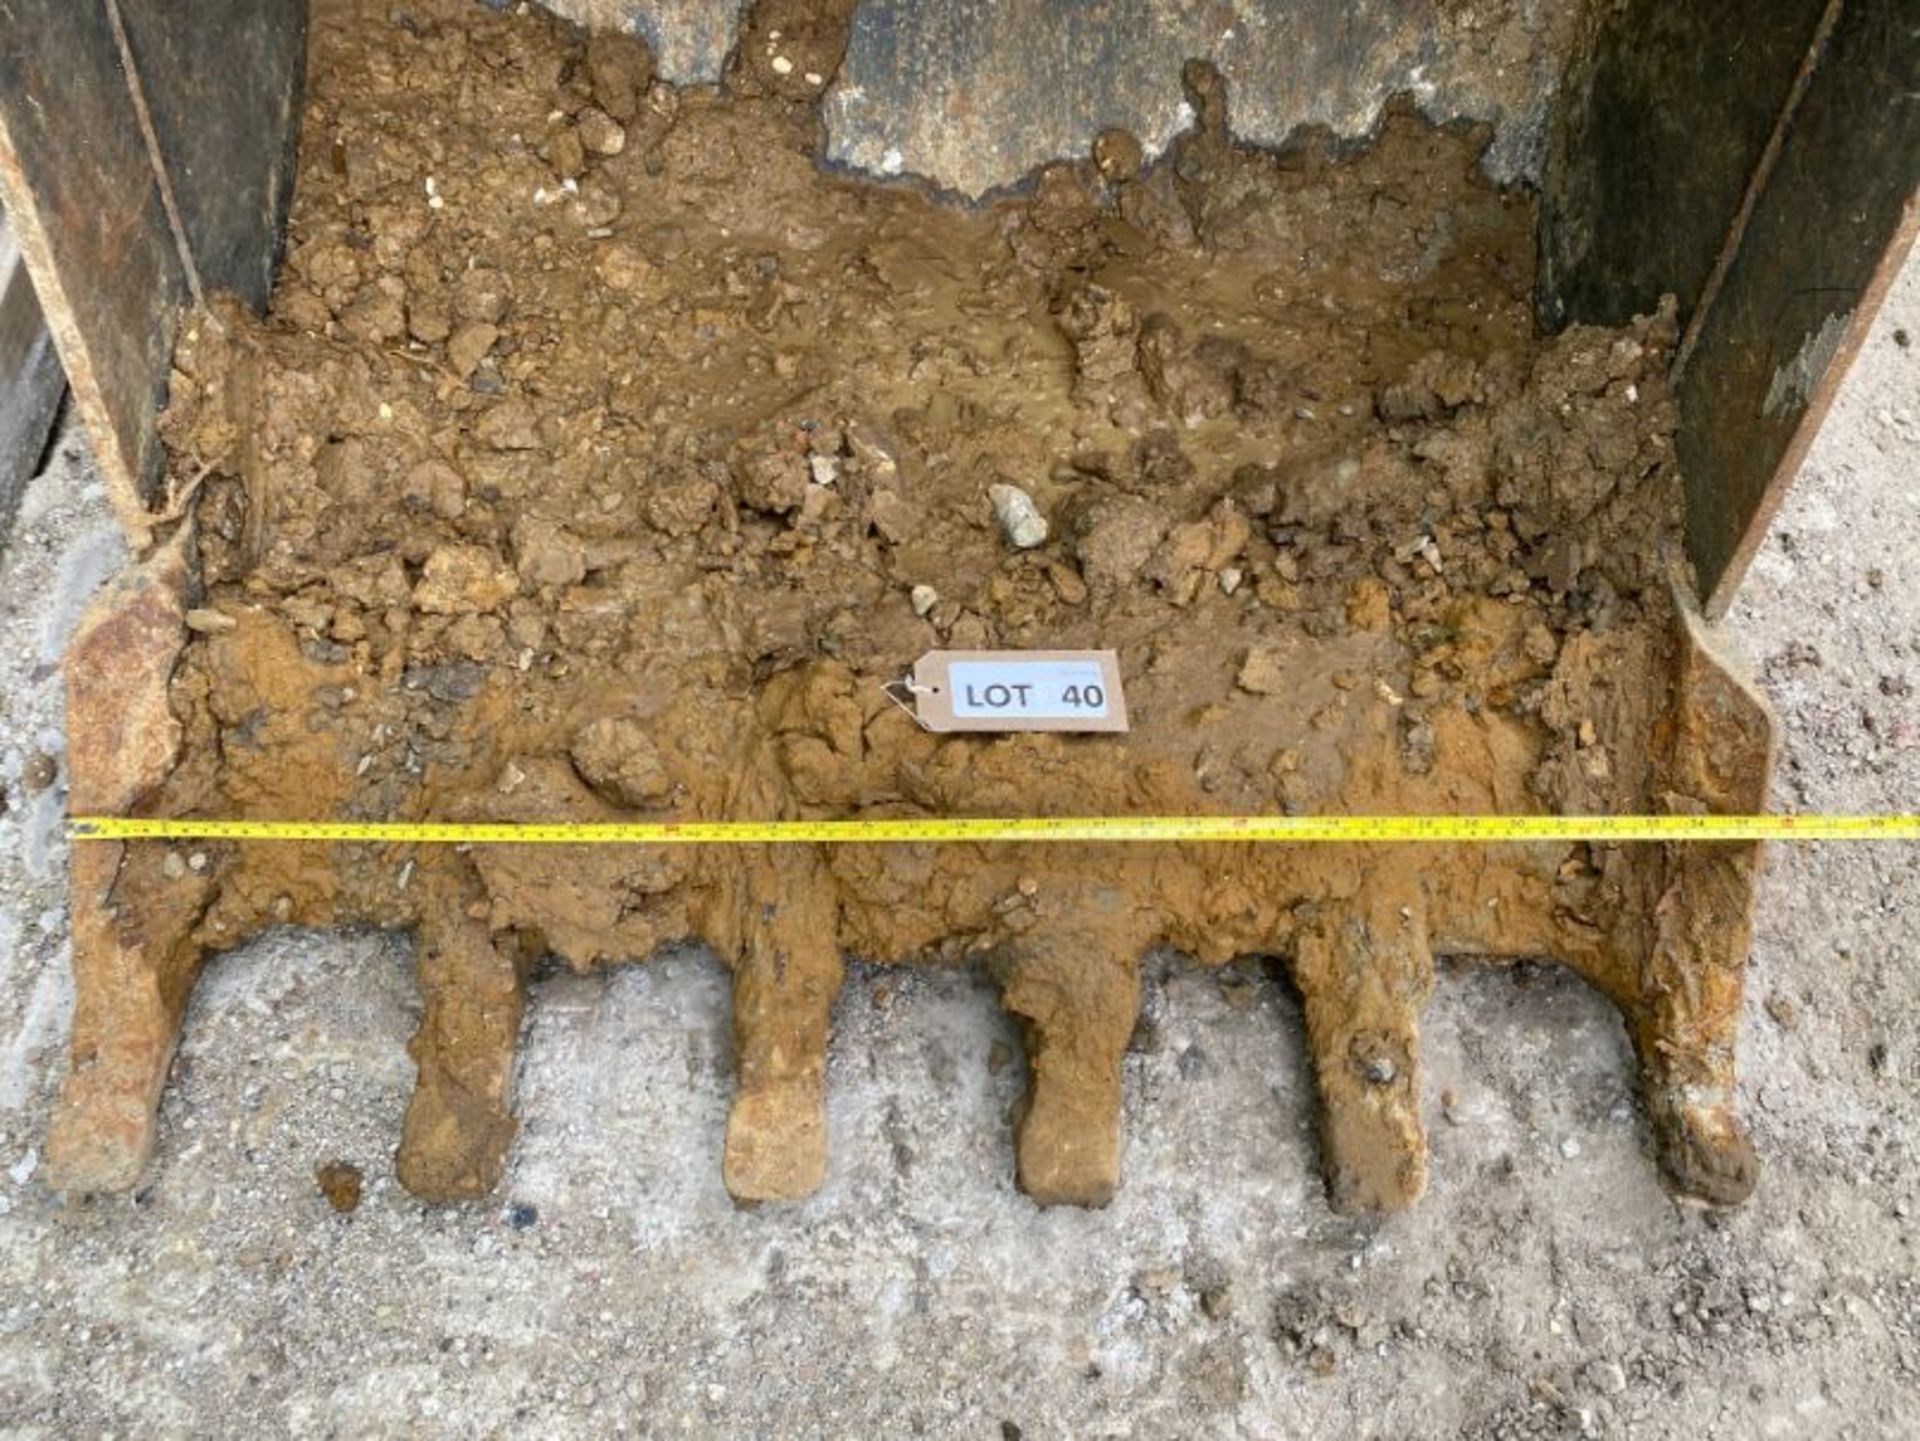 Strickland 36" excavator bucket (no age ID): 1.75" dia pin x 6" dipper x 10" between centres